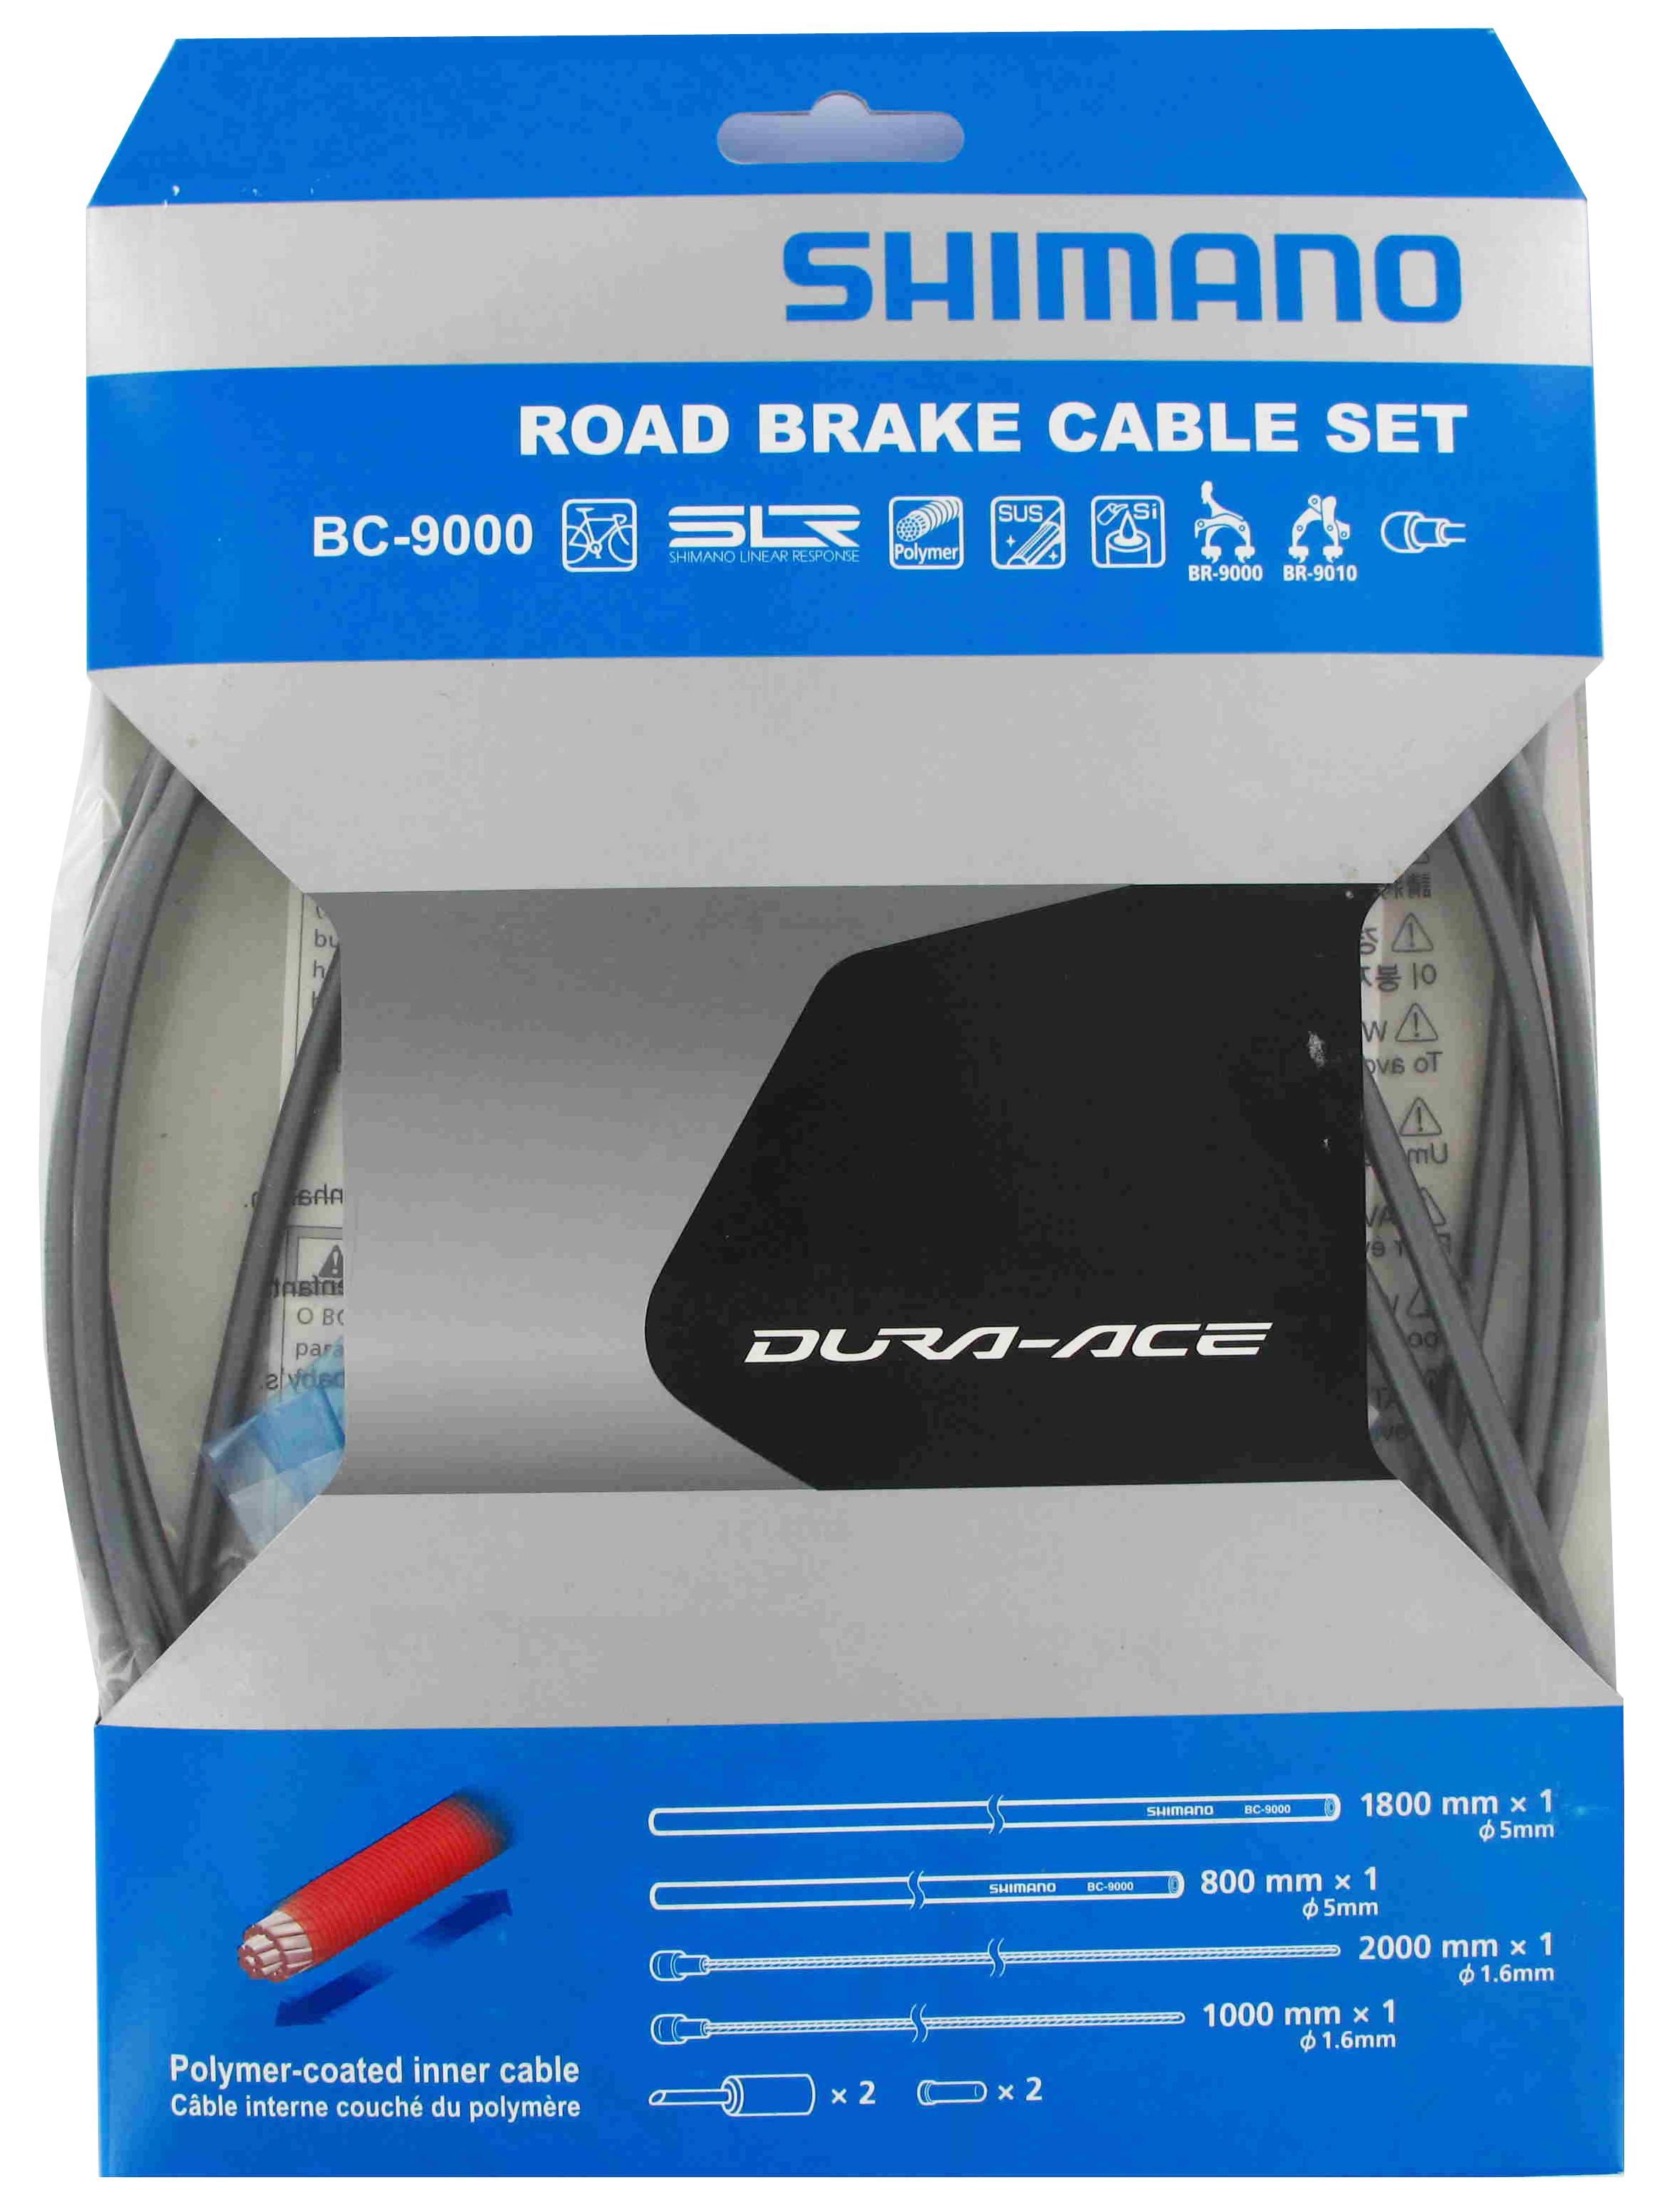 Shimano Dura-ace 9000 Road Brake Cable Set - Hi Tech Grey